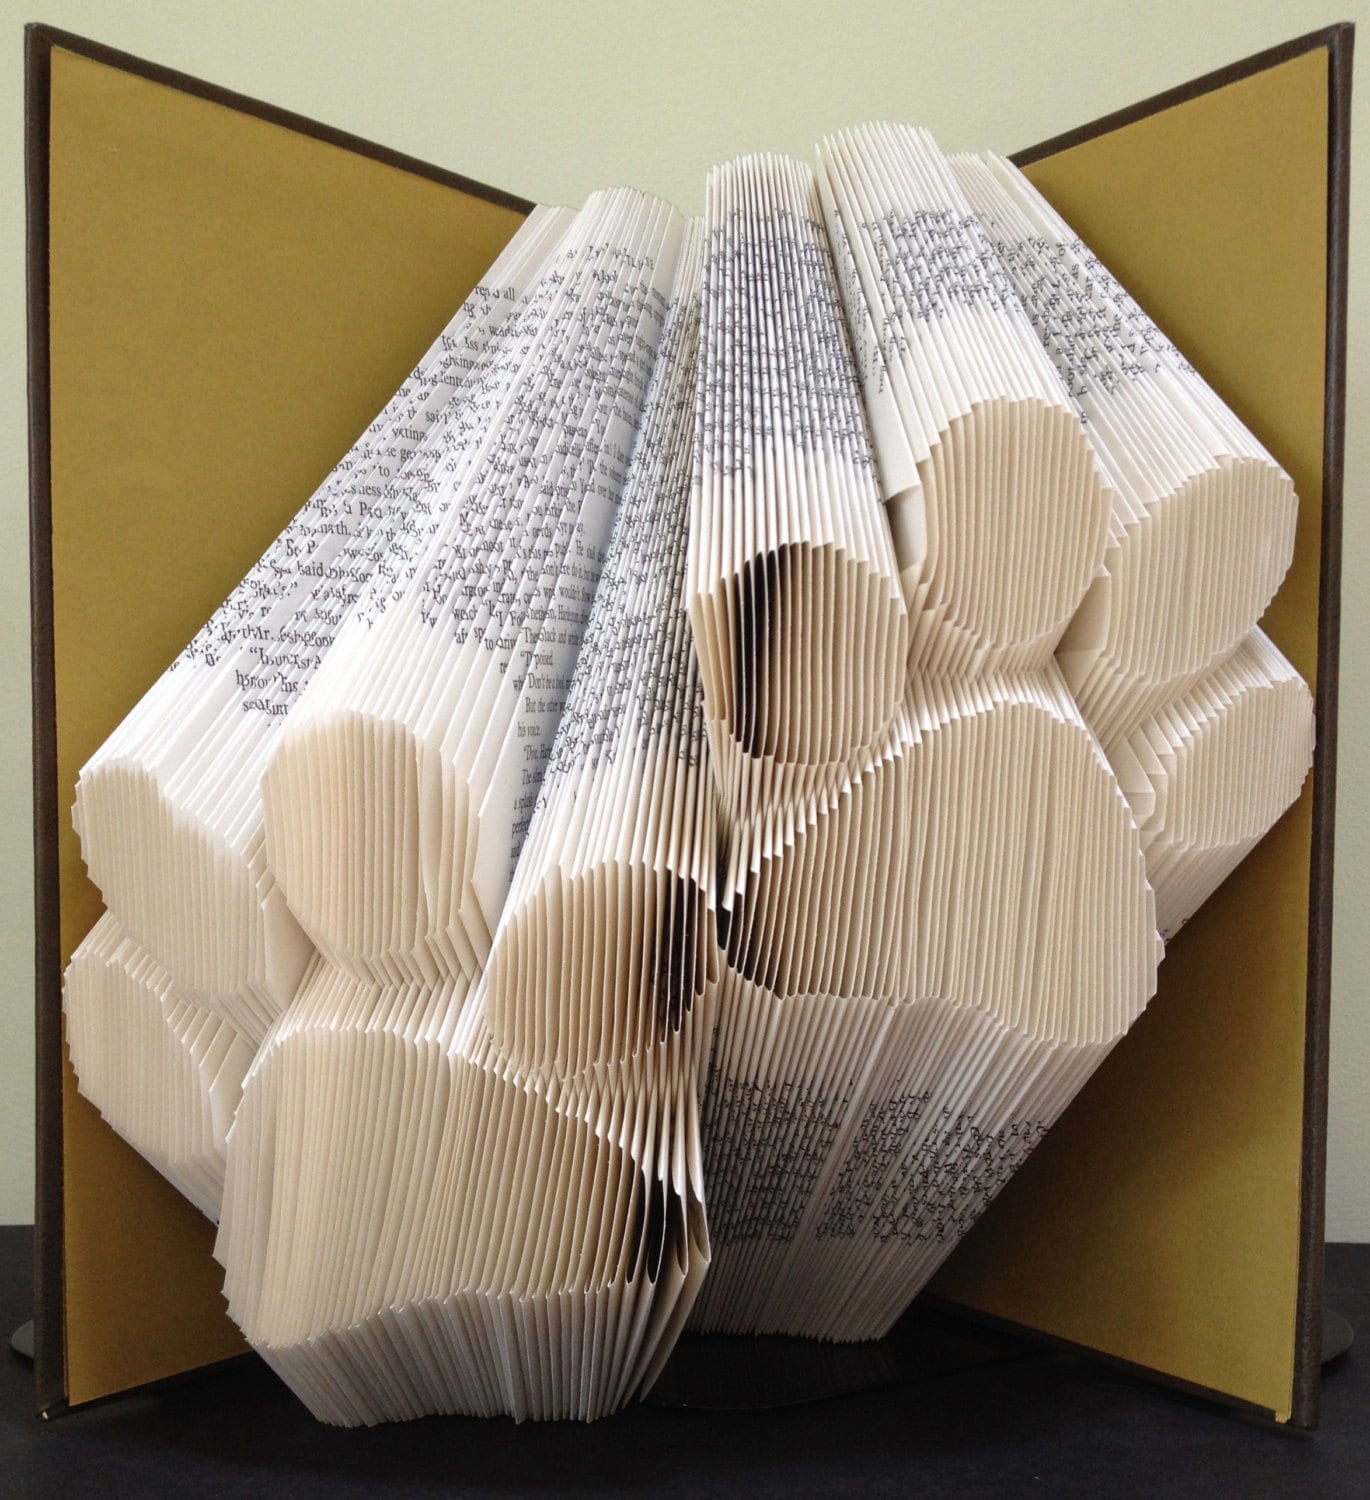 Folded book art instructions free